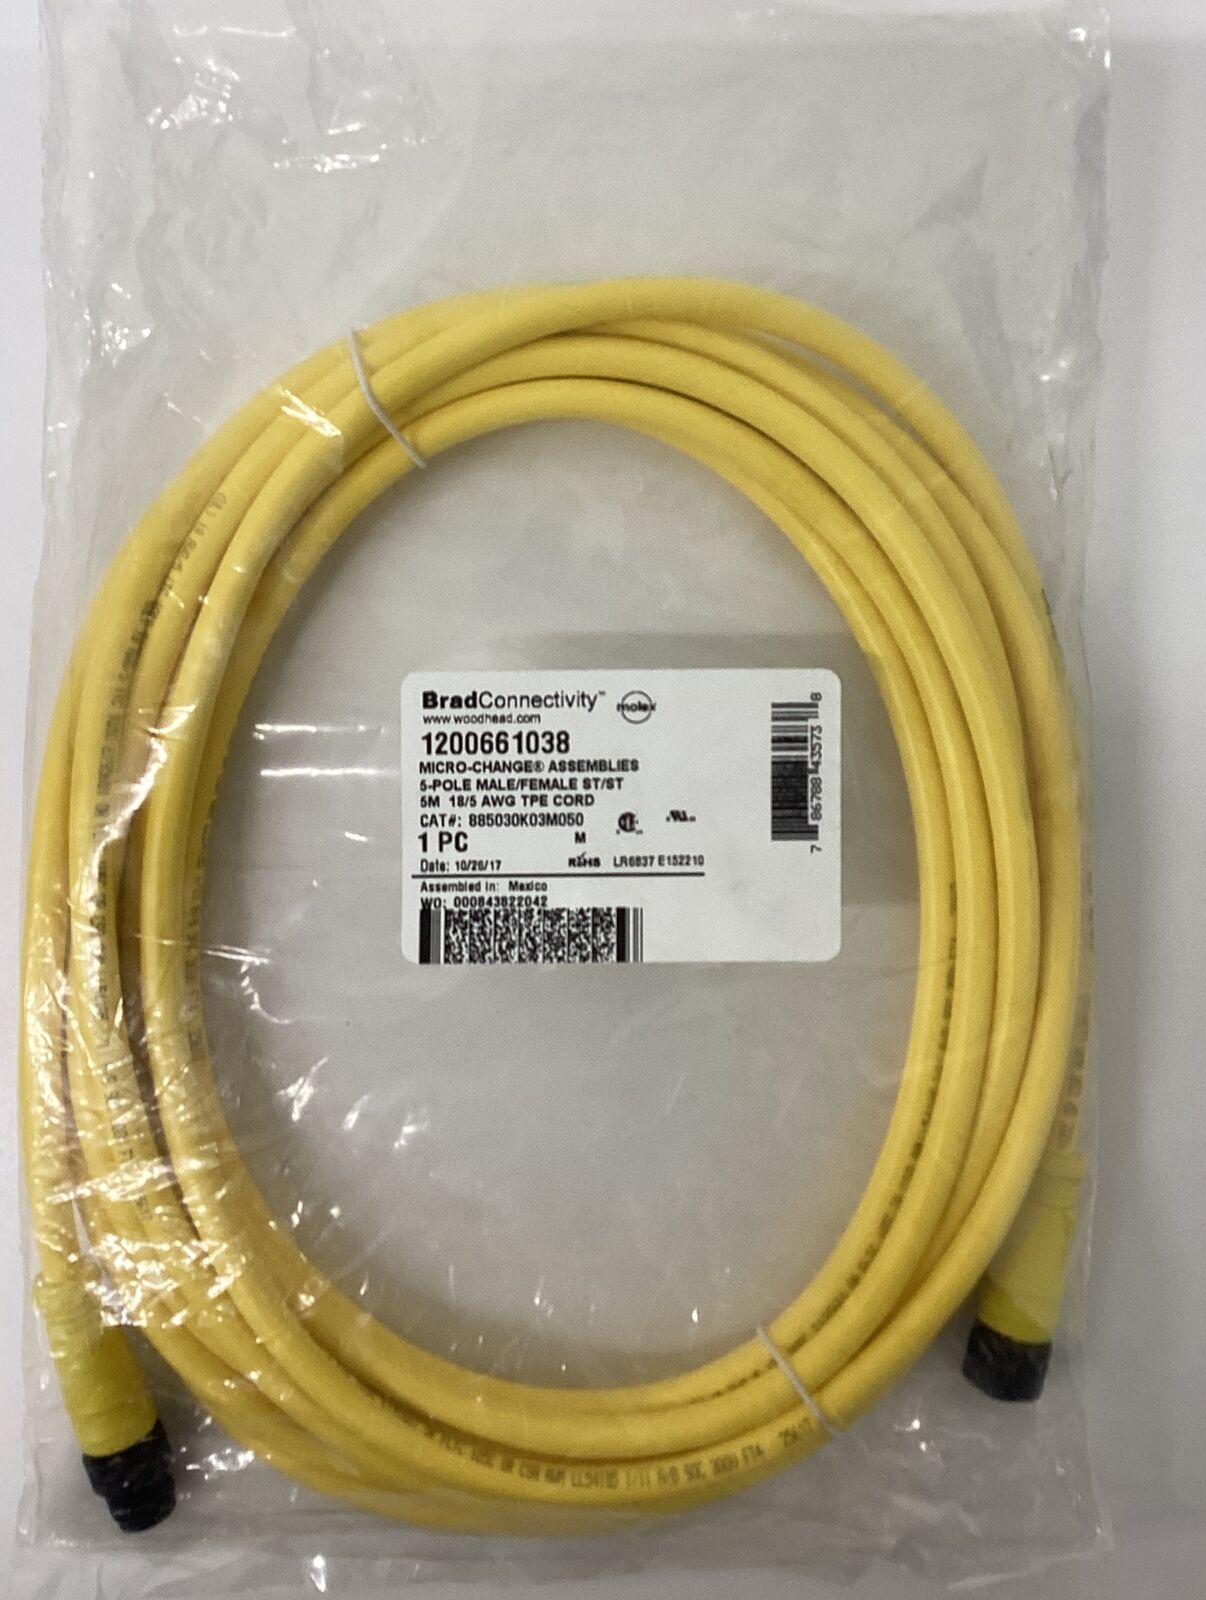 Brad Harrison 1200661038 M12 5-Pole, Male/Female Cable 5-Meters (CBL158)